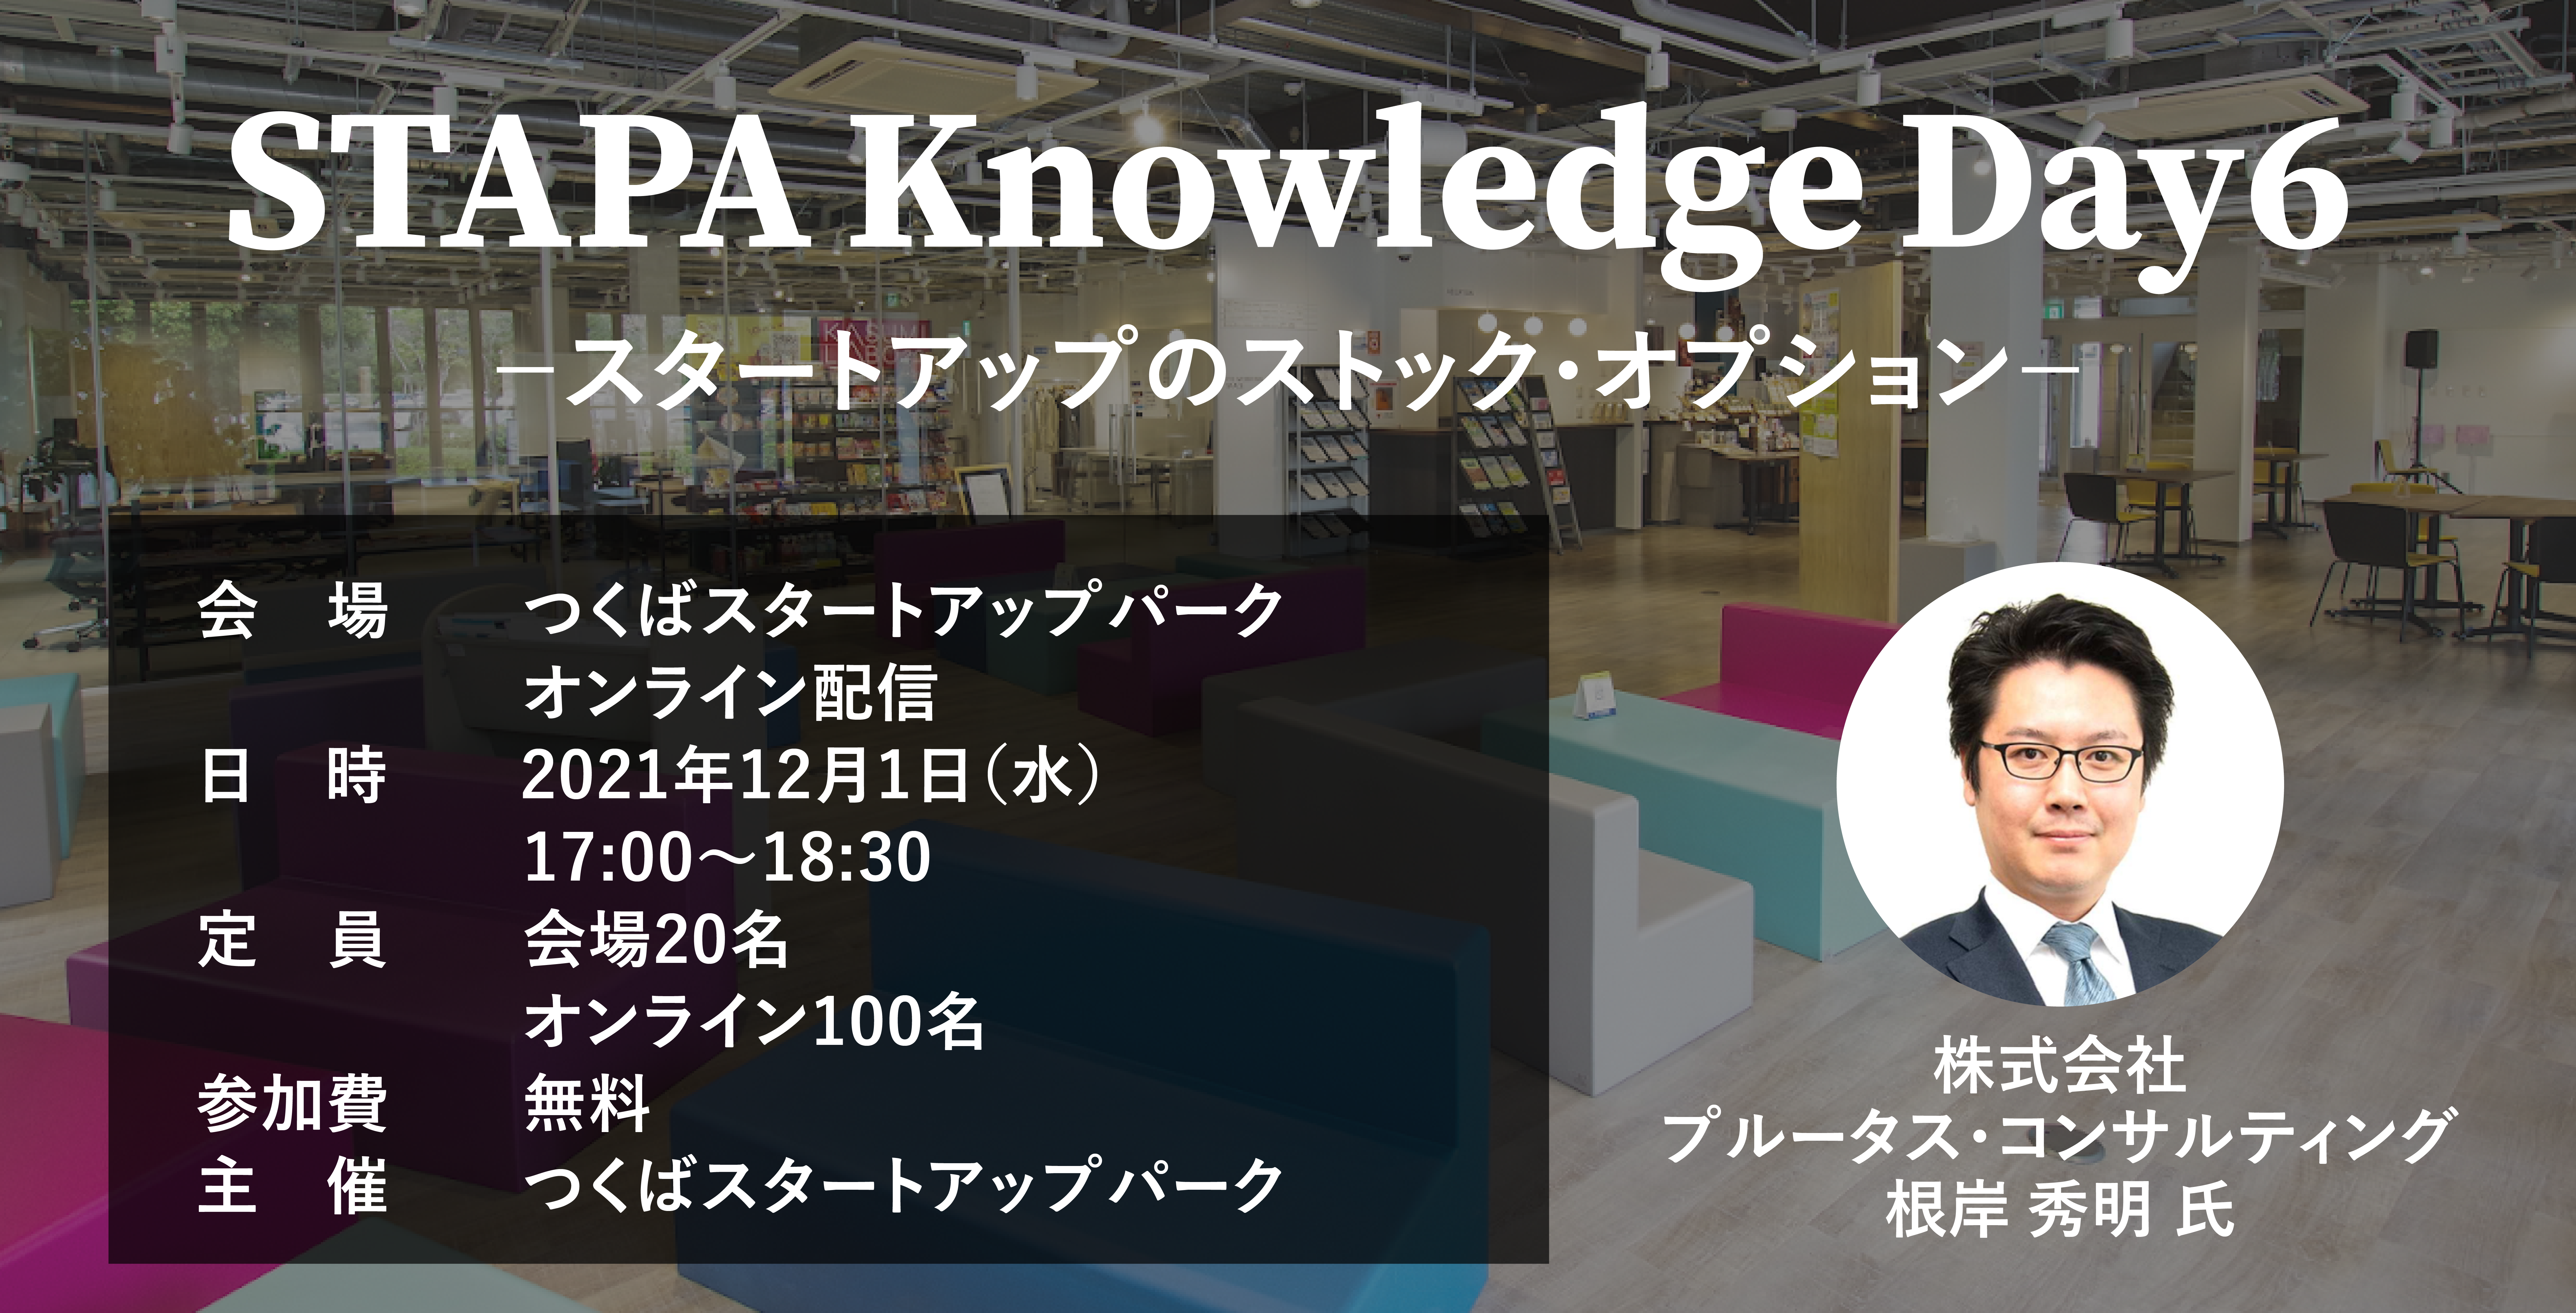 STAPA Knowledge Day6 －スタートアップのストック・オプション－